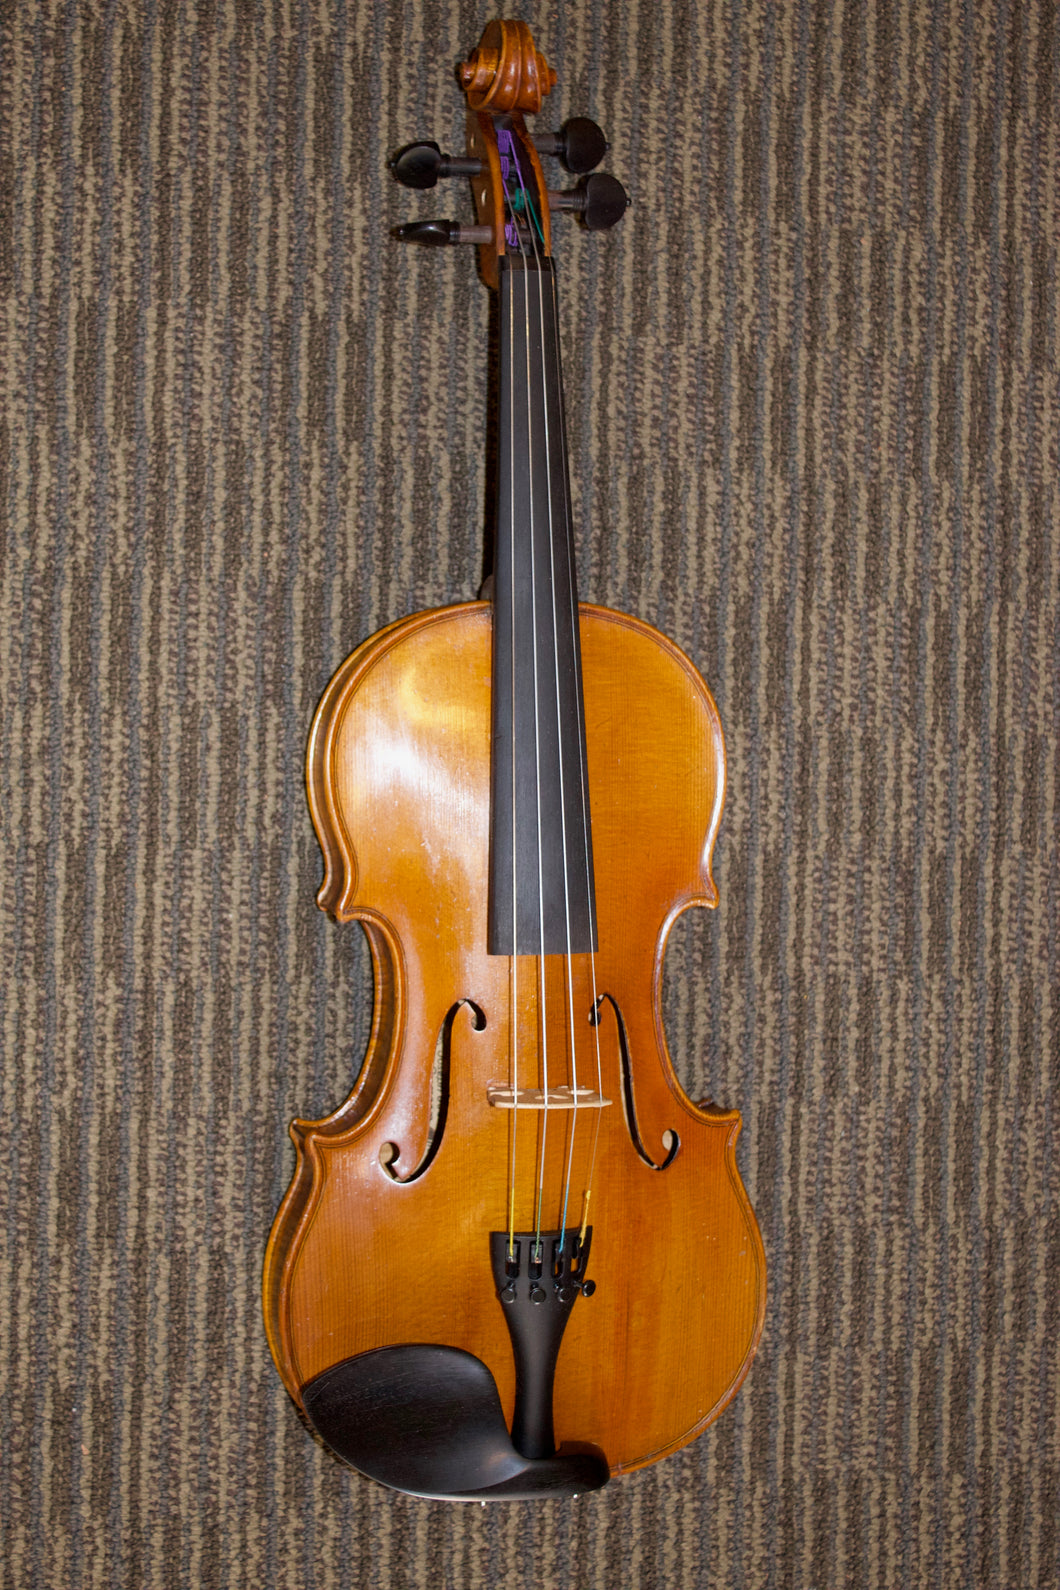 E. Reinhold Schmidt violin - 1913